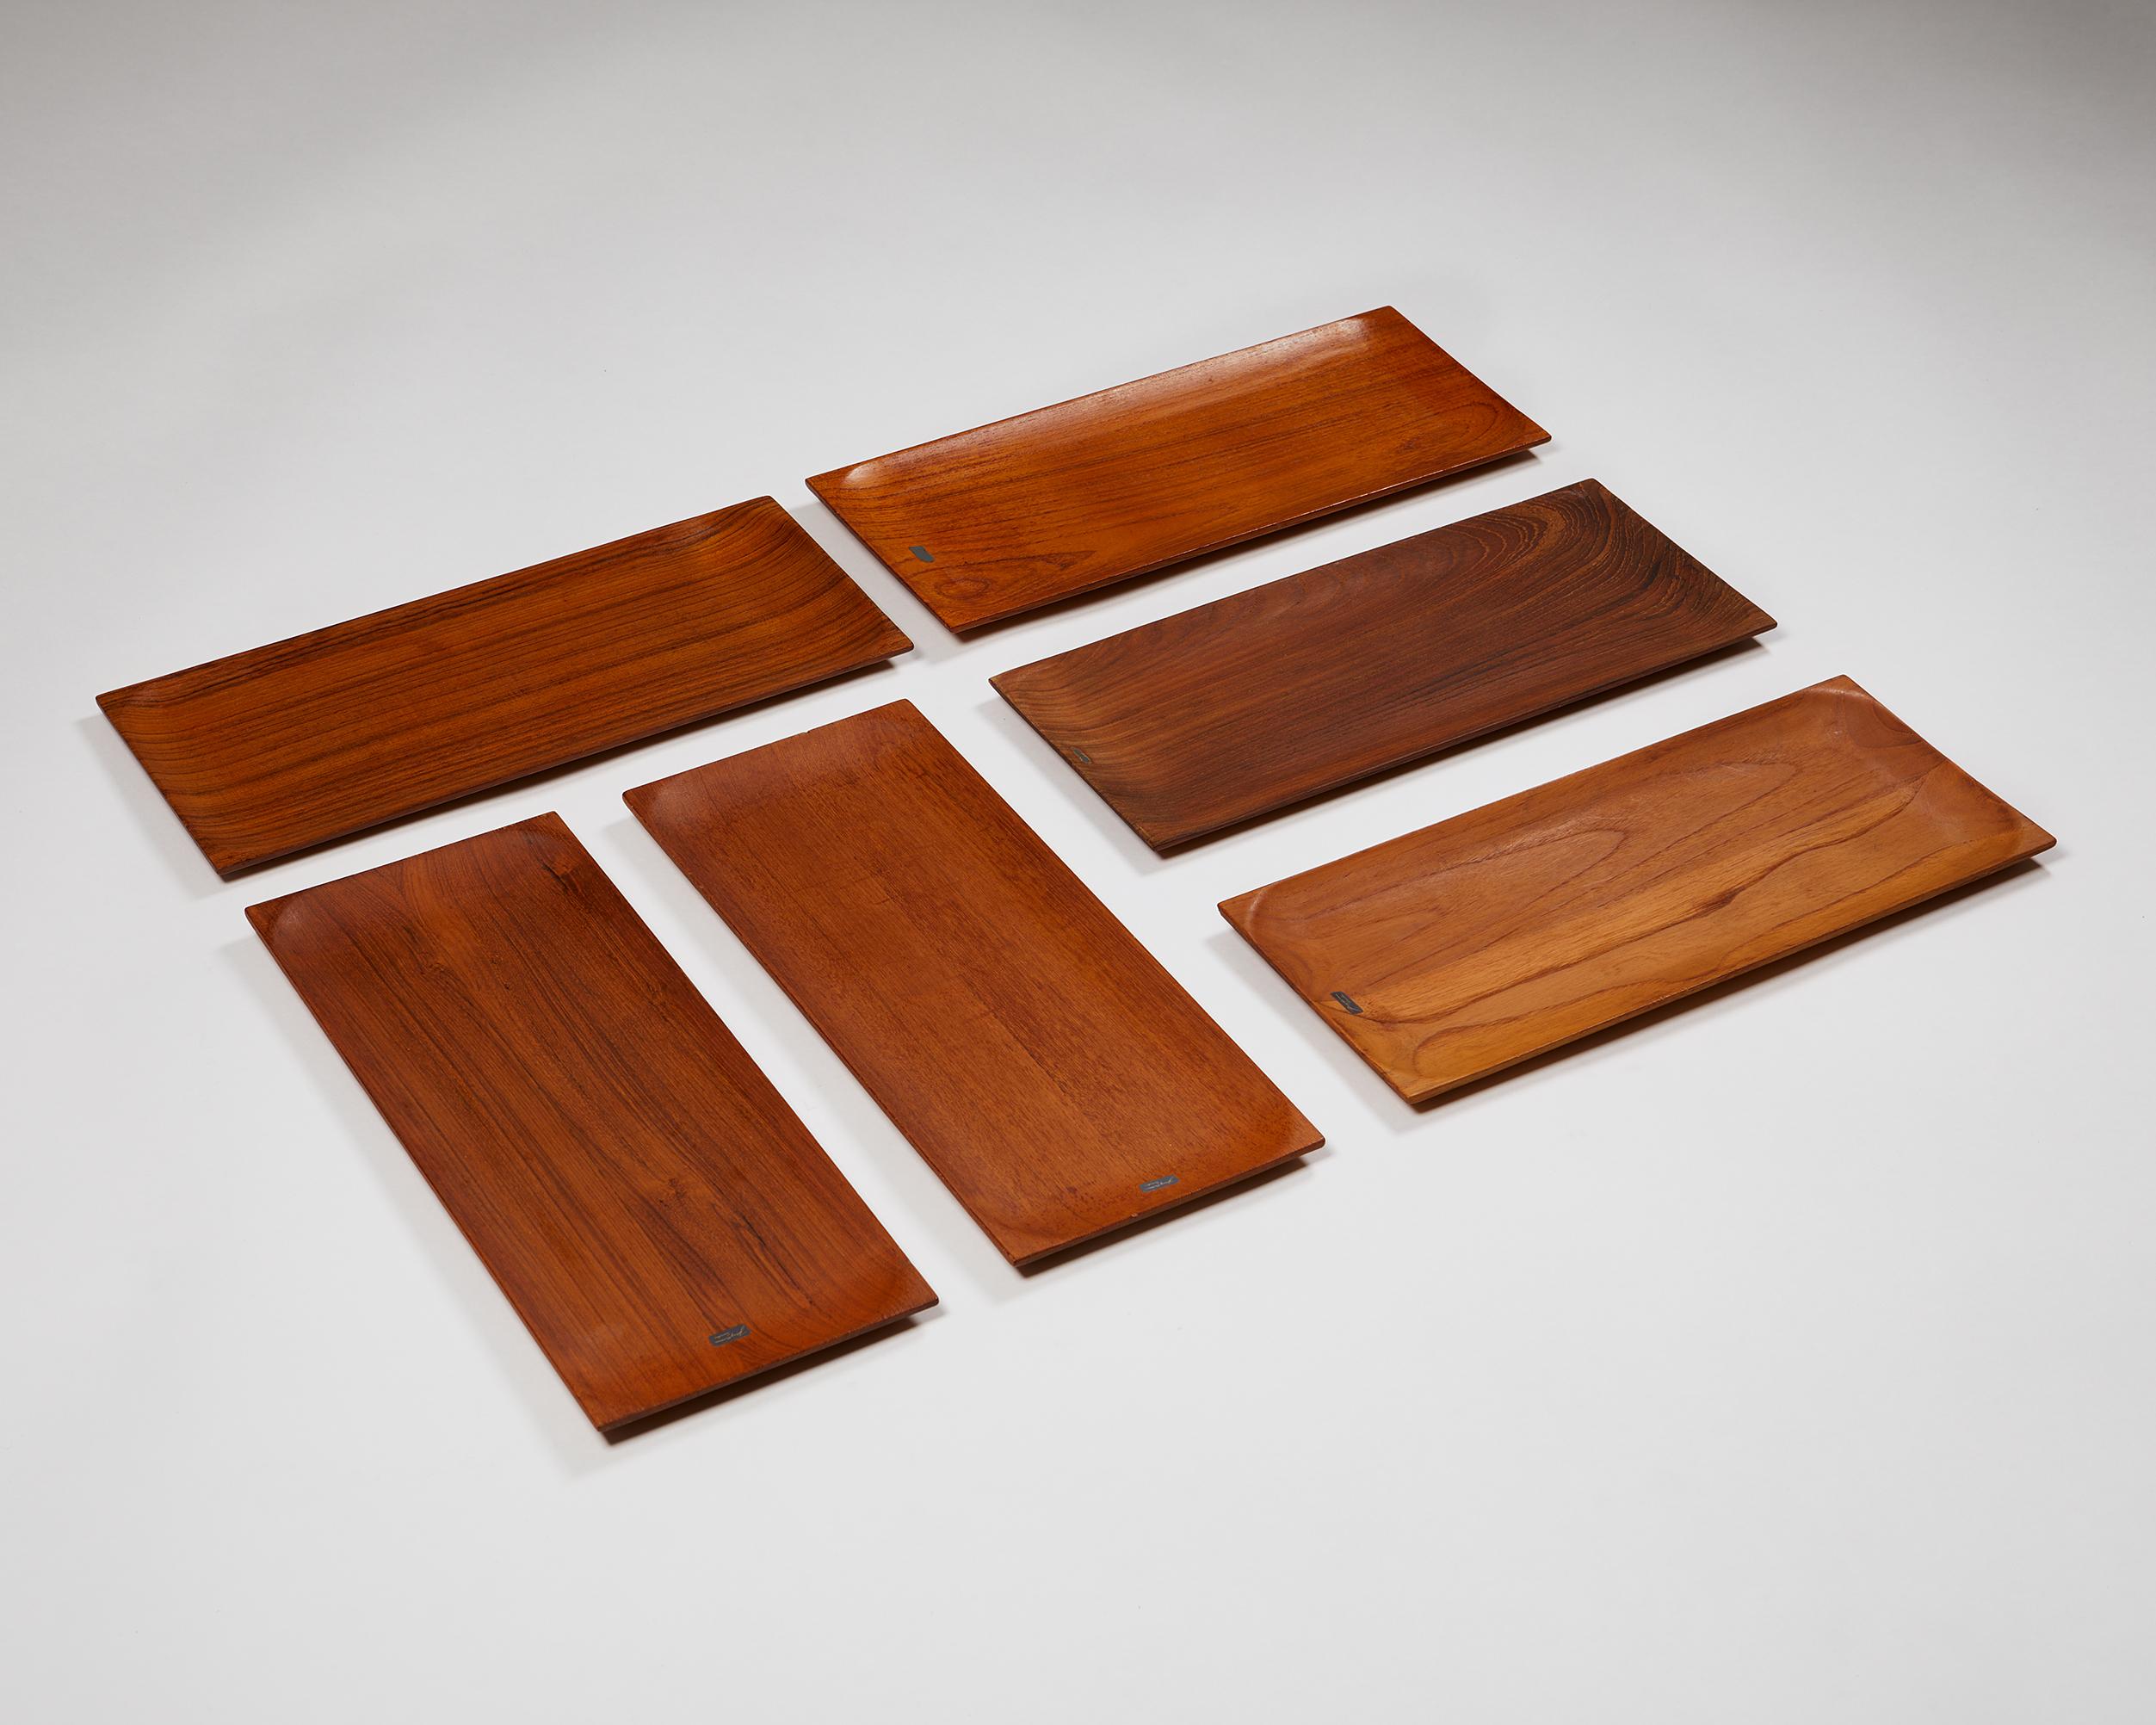 Set of six trays designed by Johnny Mattson,
Sweden. 1950s.
Solid teak.

Stamped.

Measures: H: 1.8 cm / 3/4